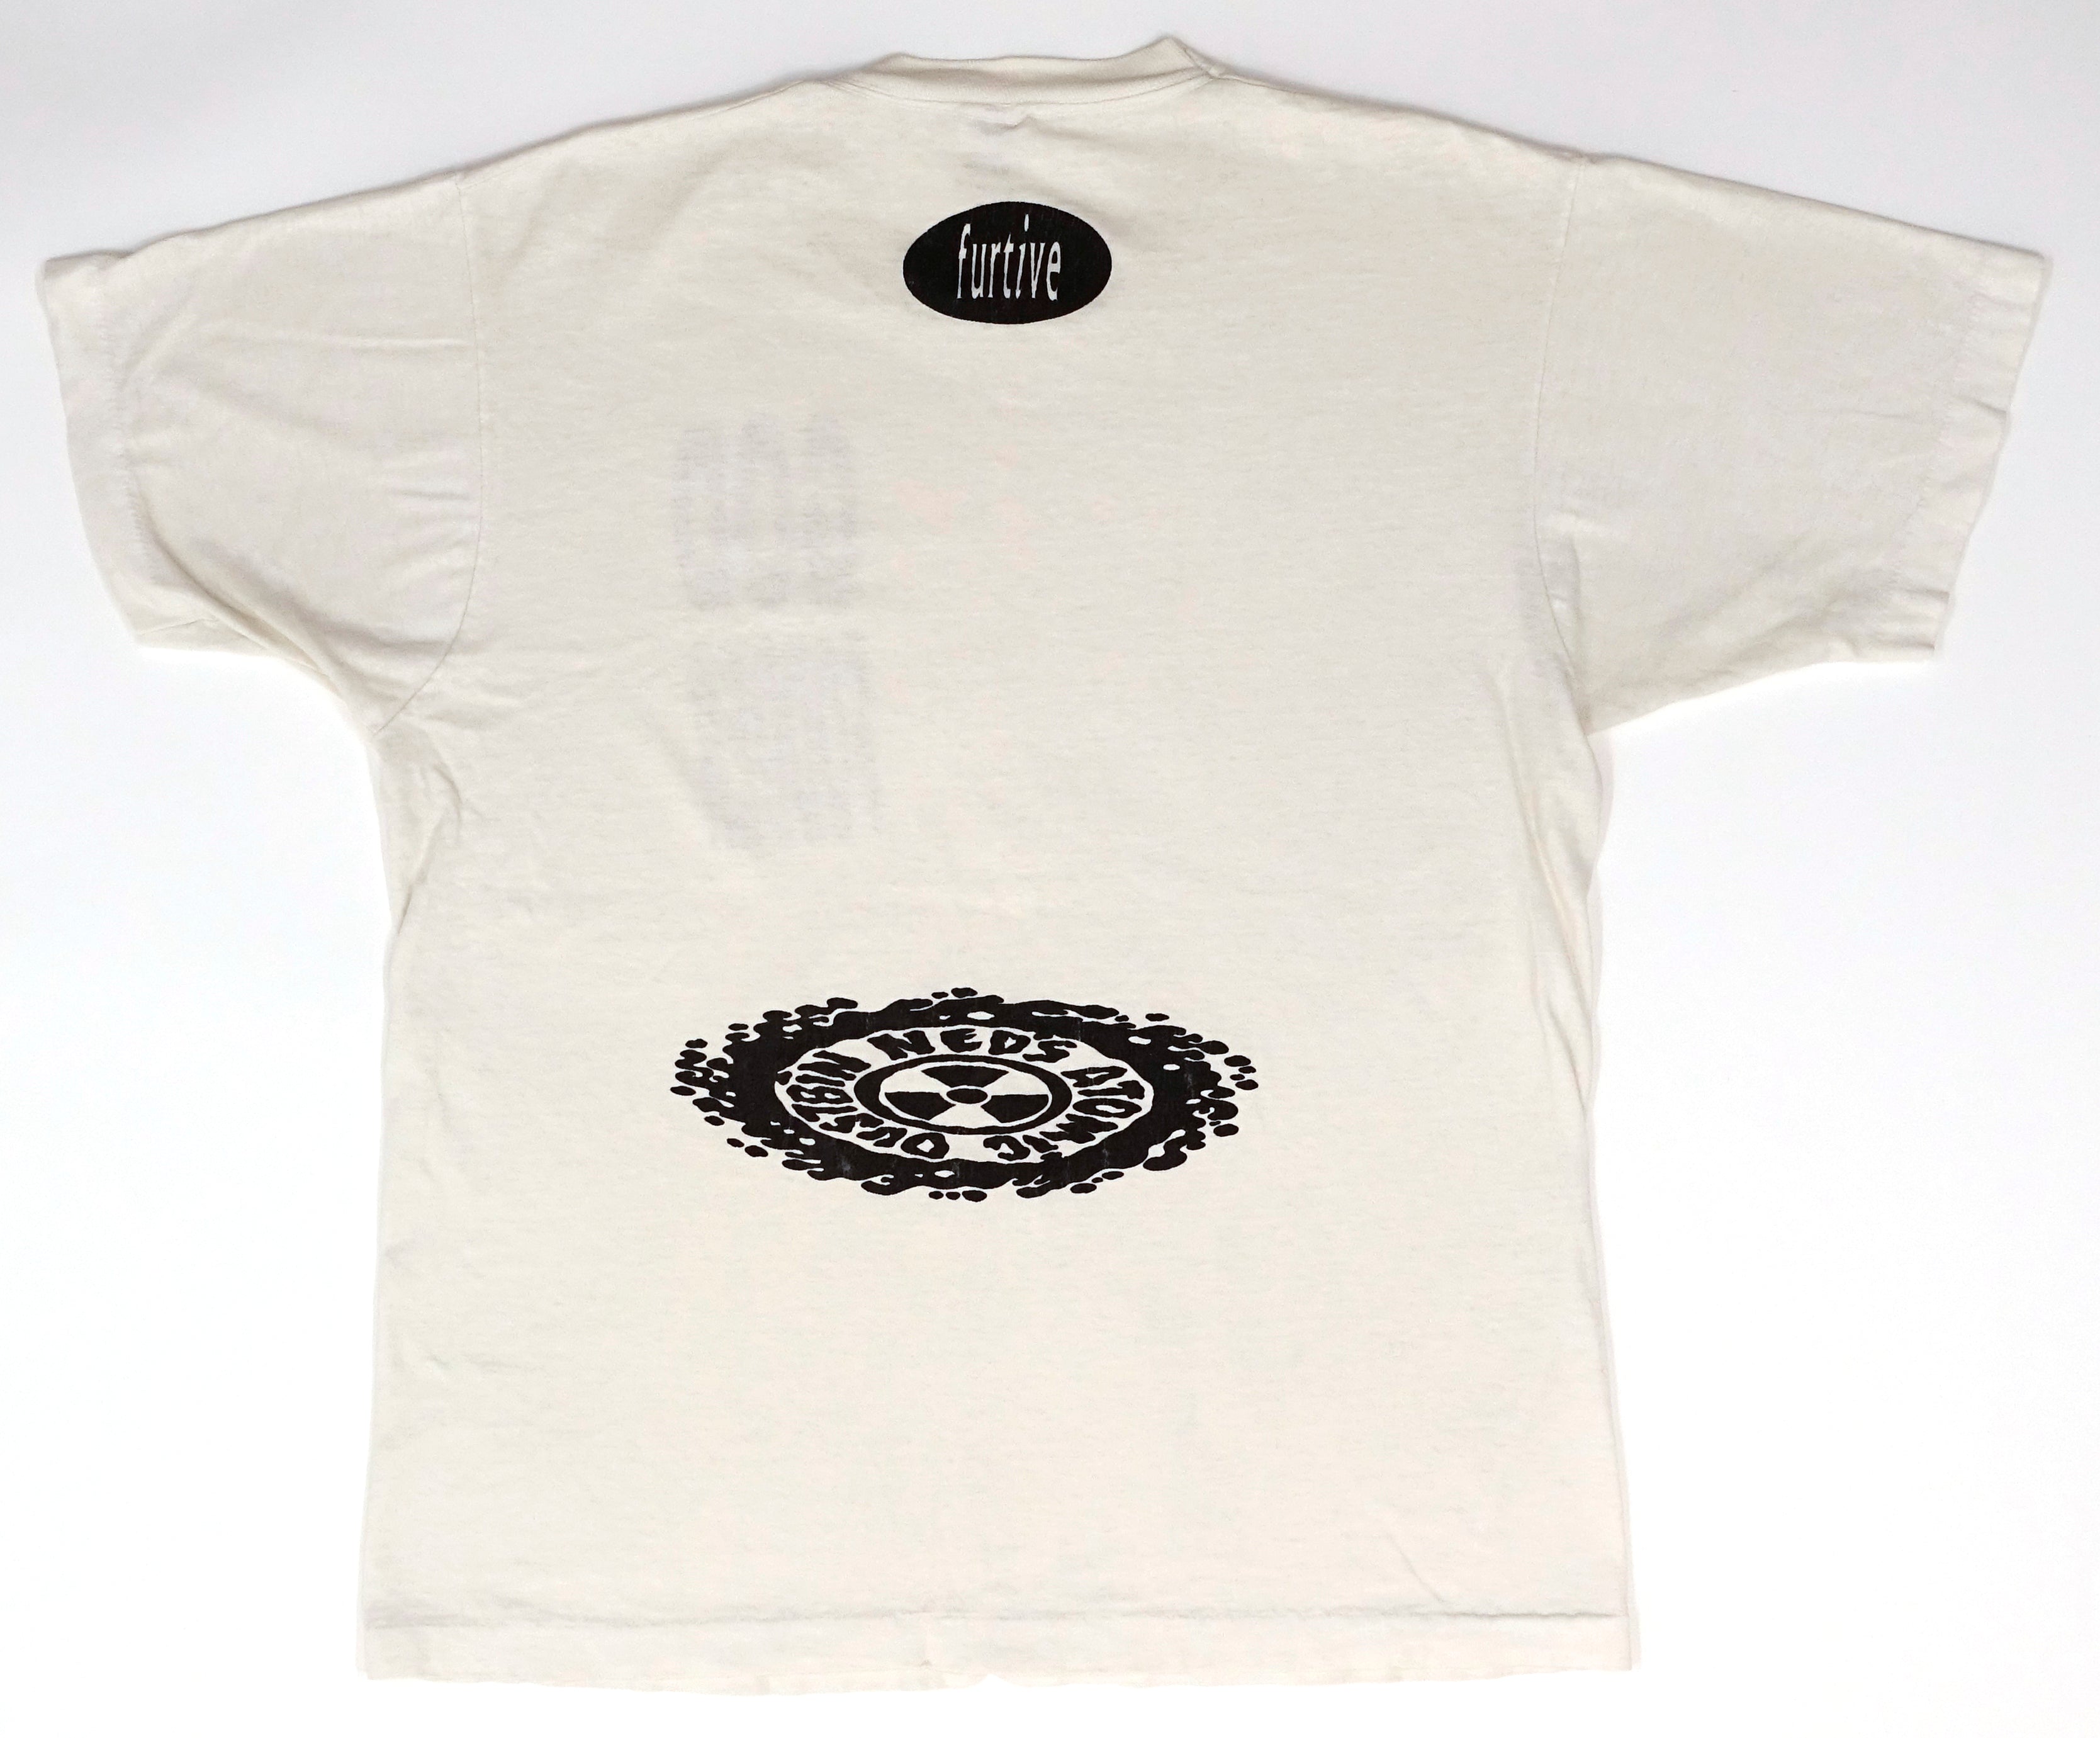 Ned's Atomic Dustbin - God Fodder Pocket Print 1992 Tour Shirt Size XL